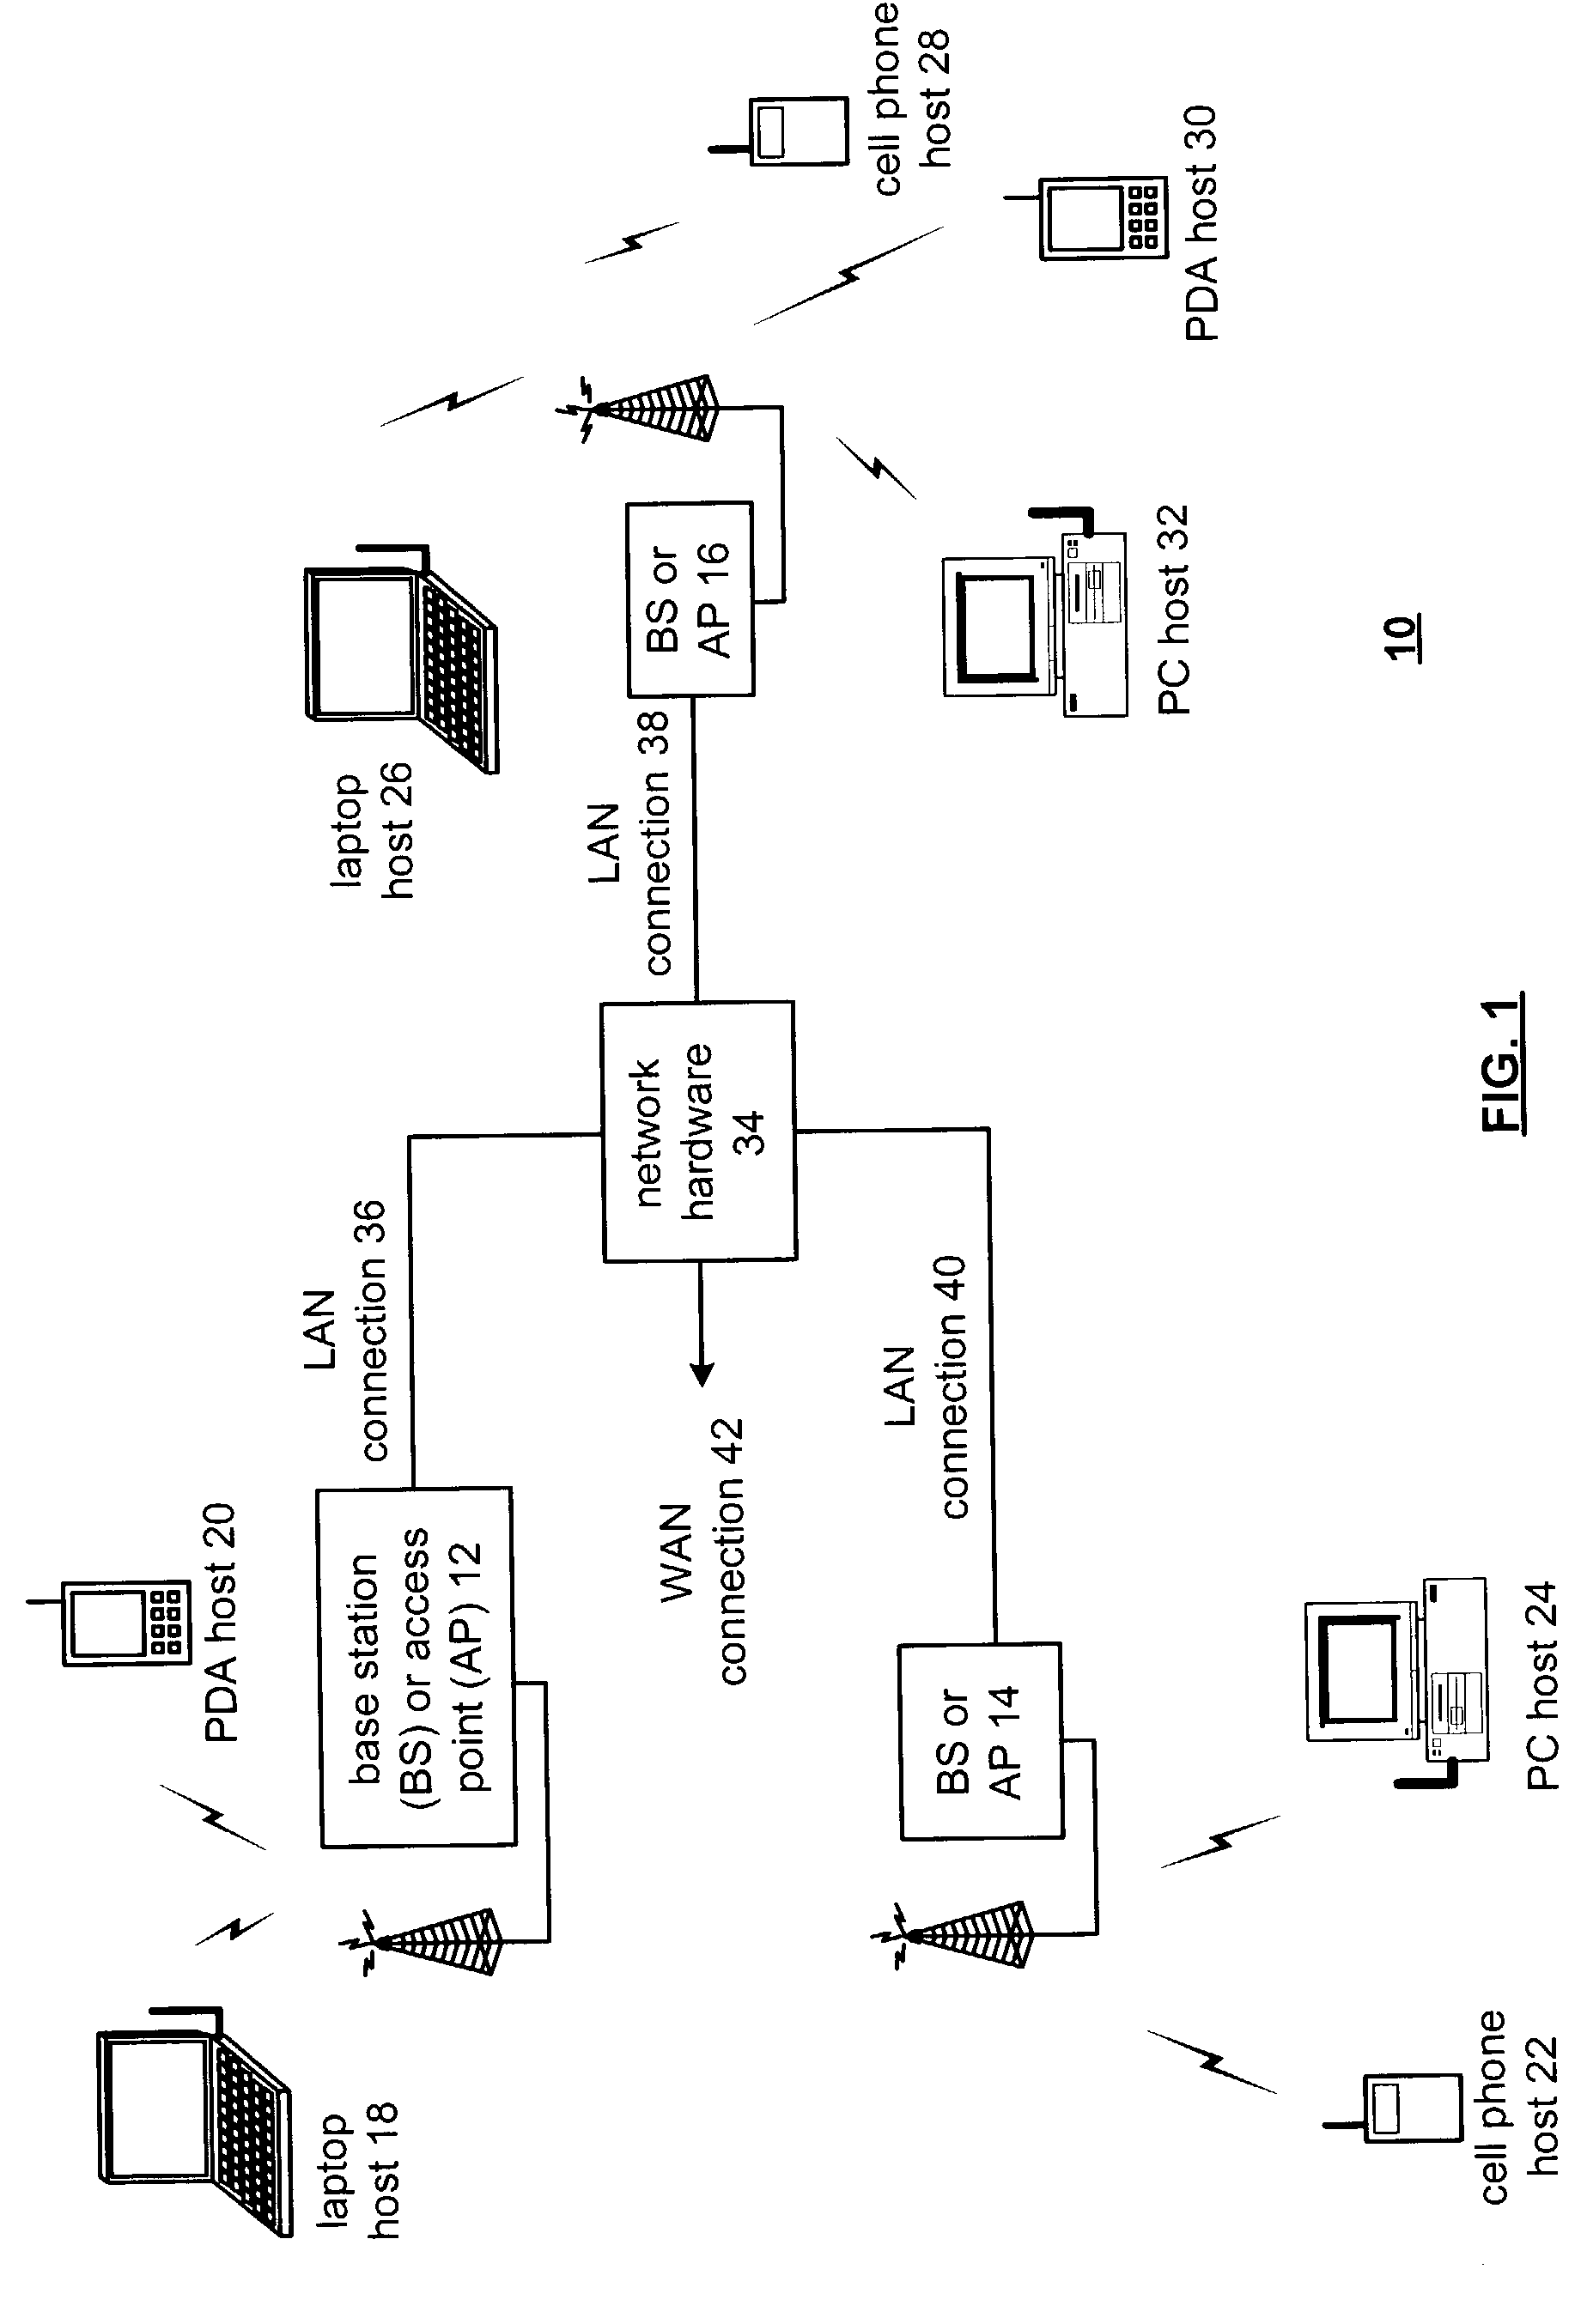 Power management of radio transceiver elements